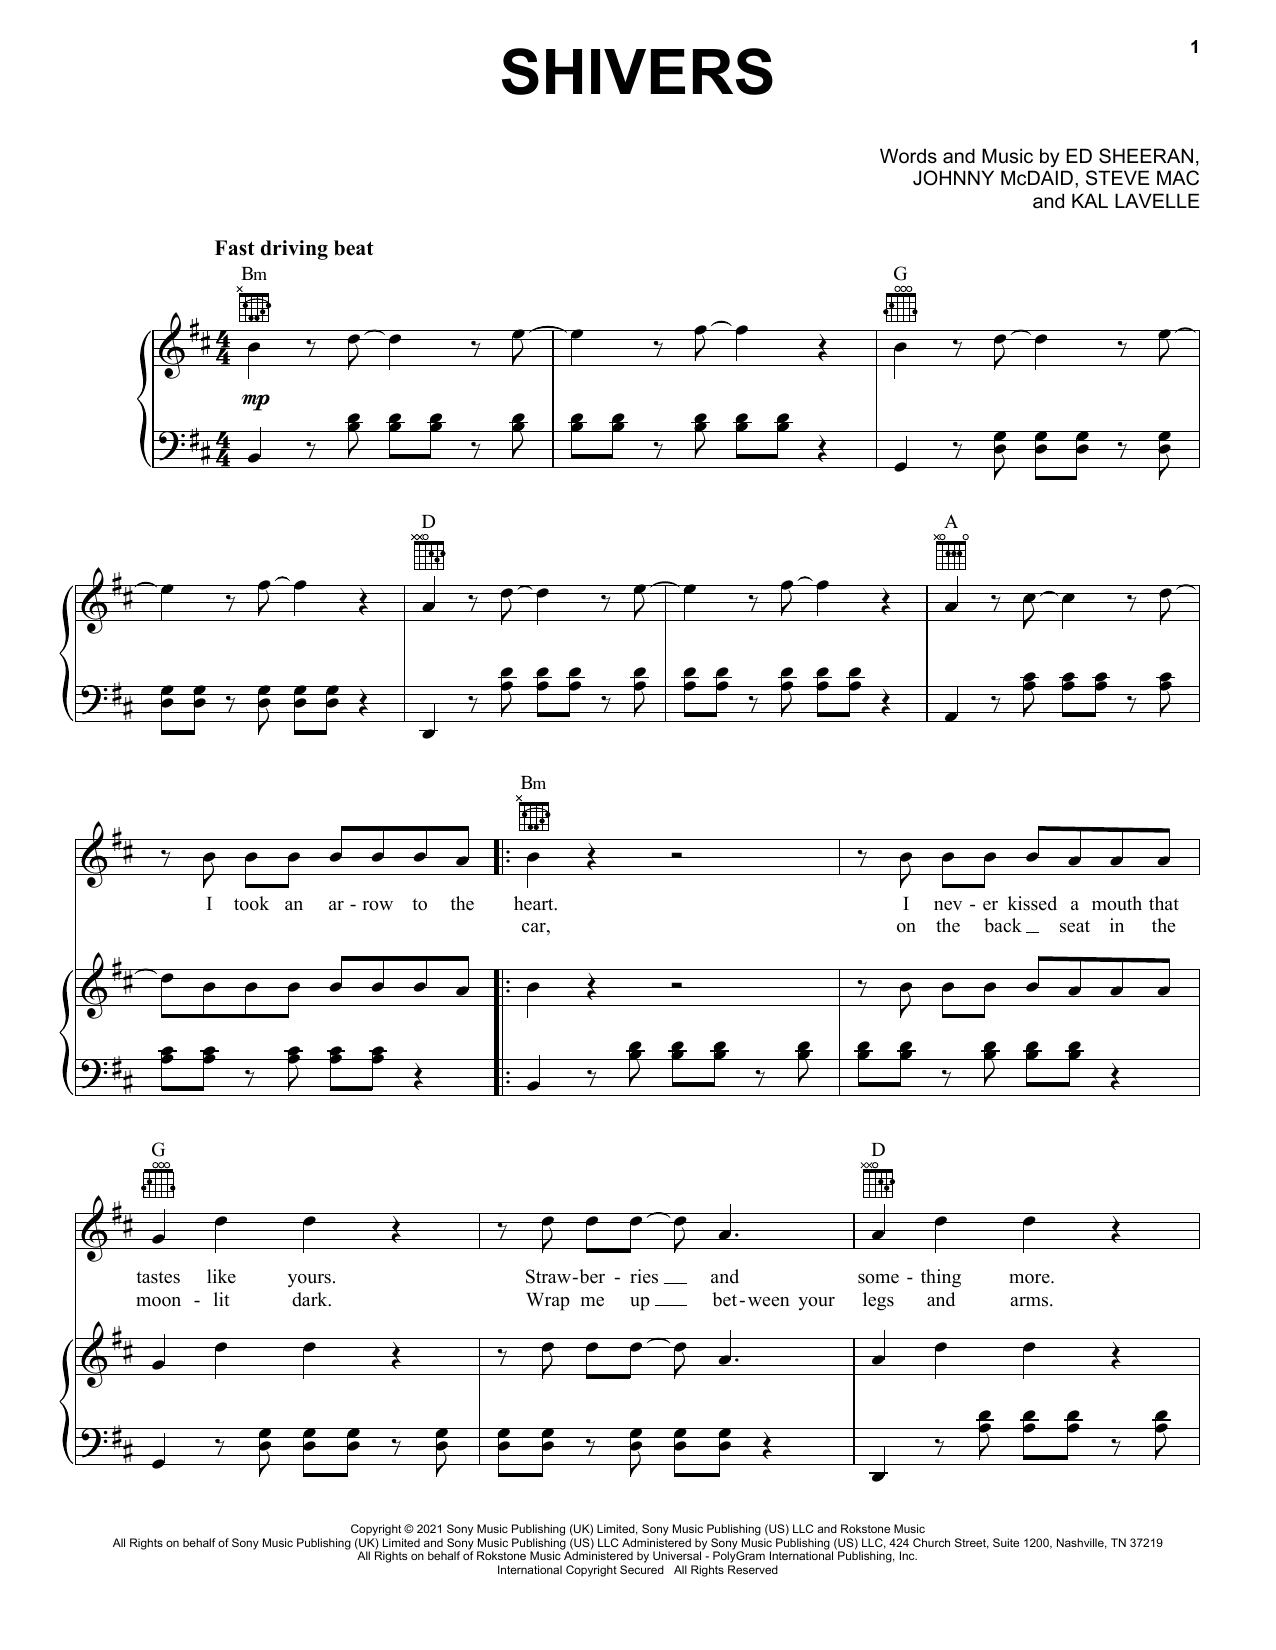 Ed Sheeran Shivers Sheet Music Notes & Chords for Piano, Vocal & Guitar (Right-Hand Melody) - Download or Print PDF